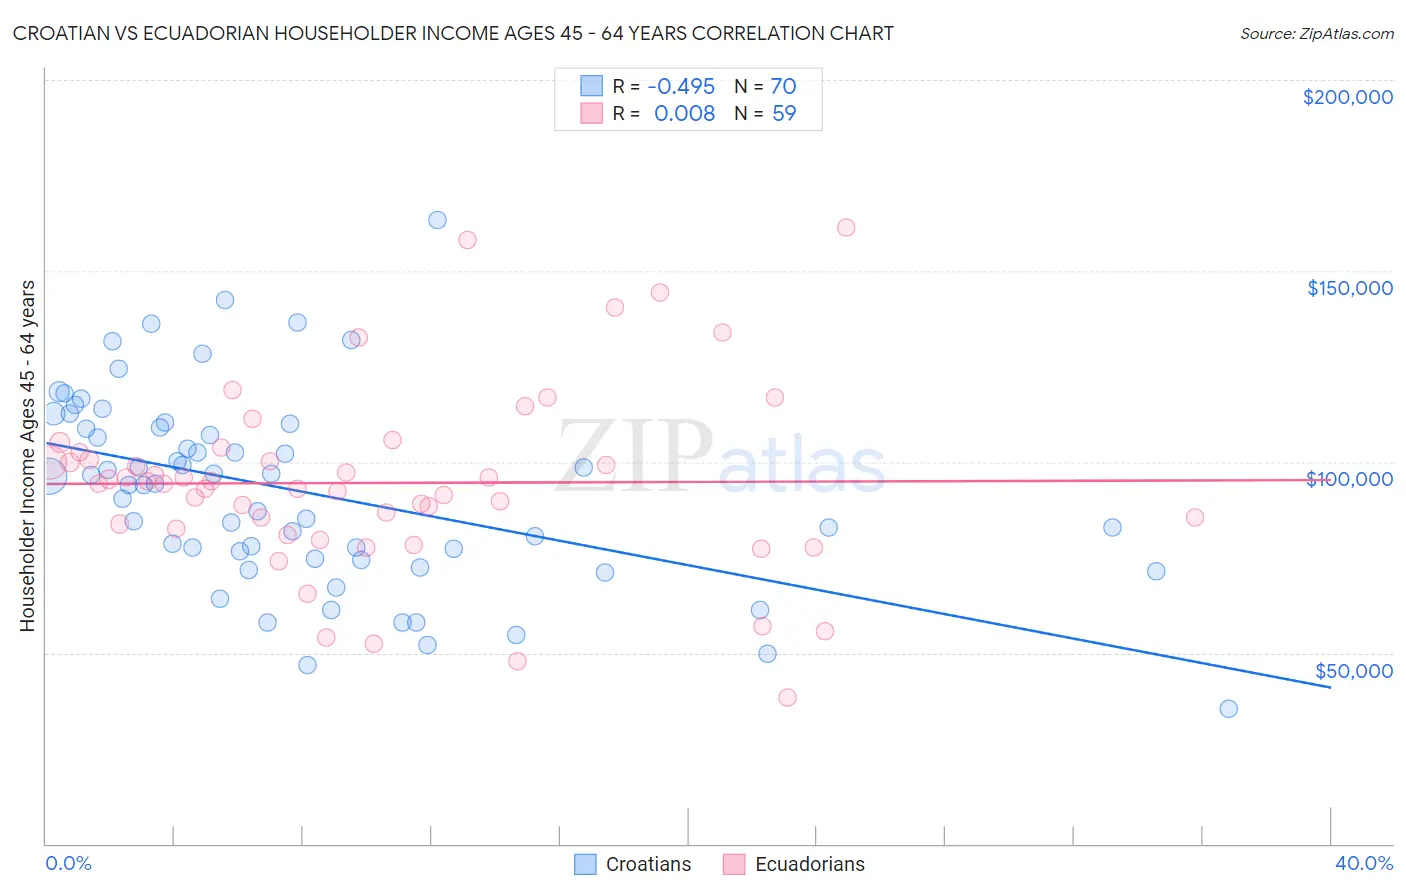 Croatian vs Ecuadorian Householder Income Ages 45 - 64 years